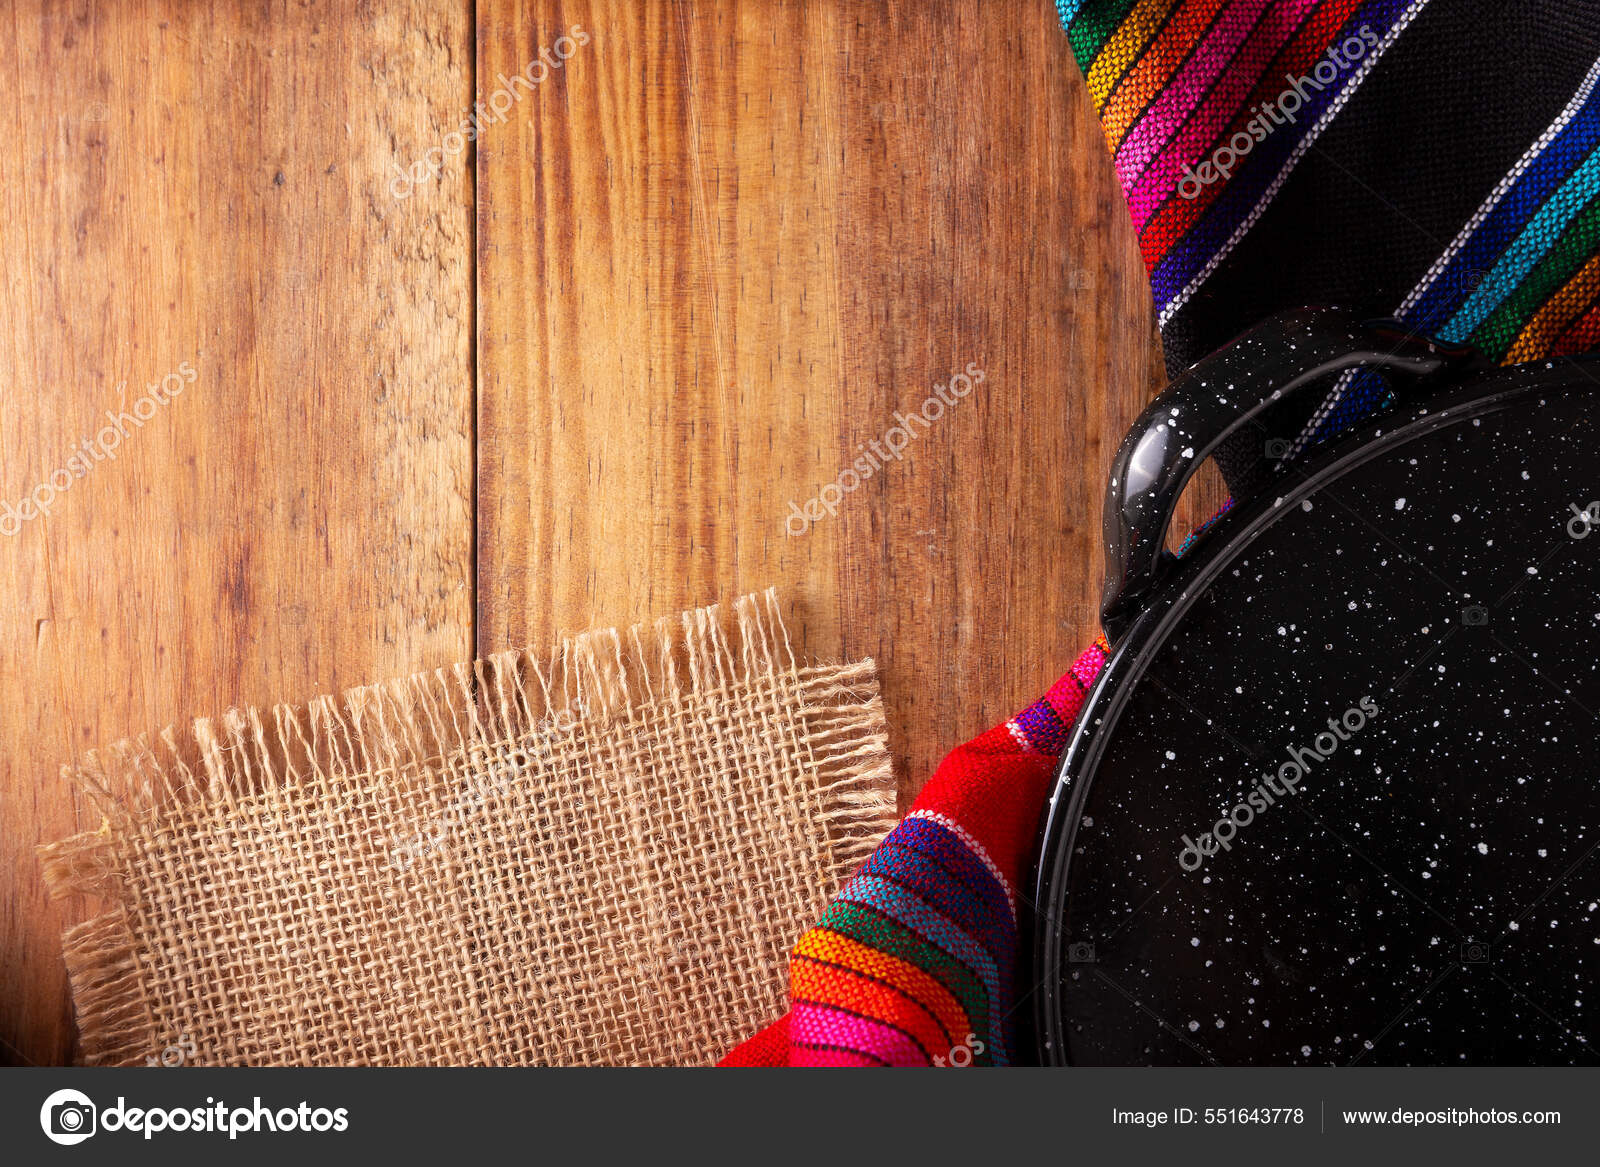 https://st.depositphotos.com/1257517/55164/i/1600/depositphotos_551643778-stock-photo-mexican-kitchen-utensils-colorful-traditional.jpg